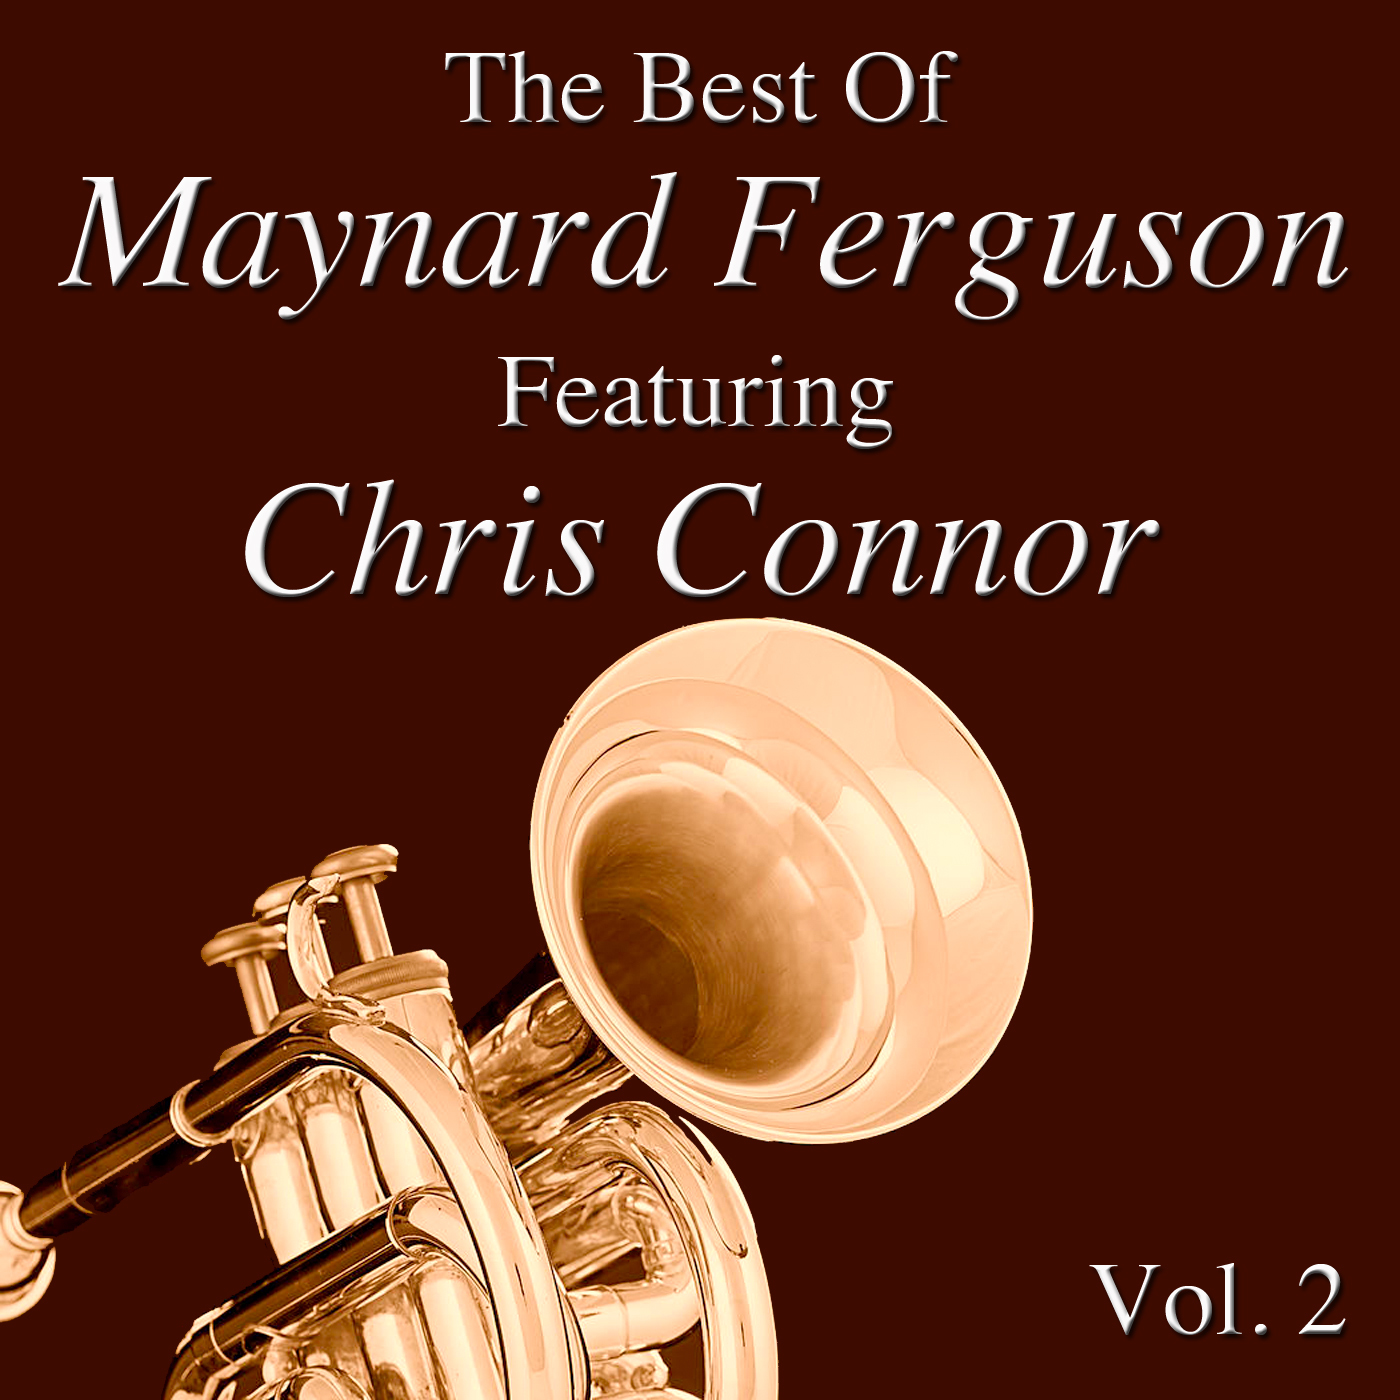 The Best Of Maynard Ferguson Featuring Chris Connor Vol. 2